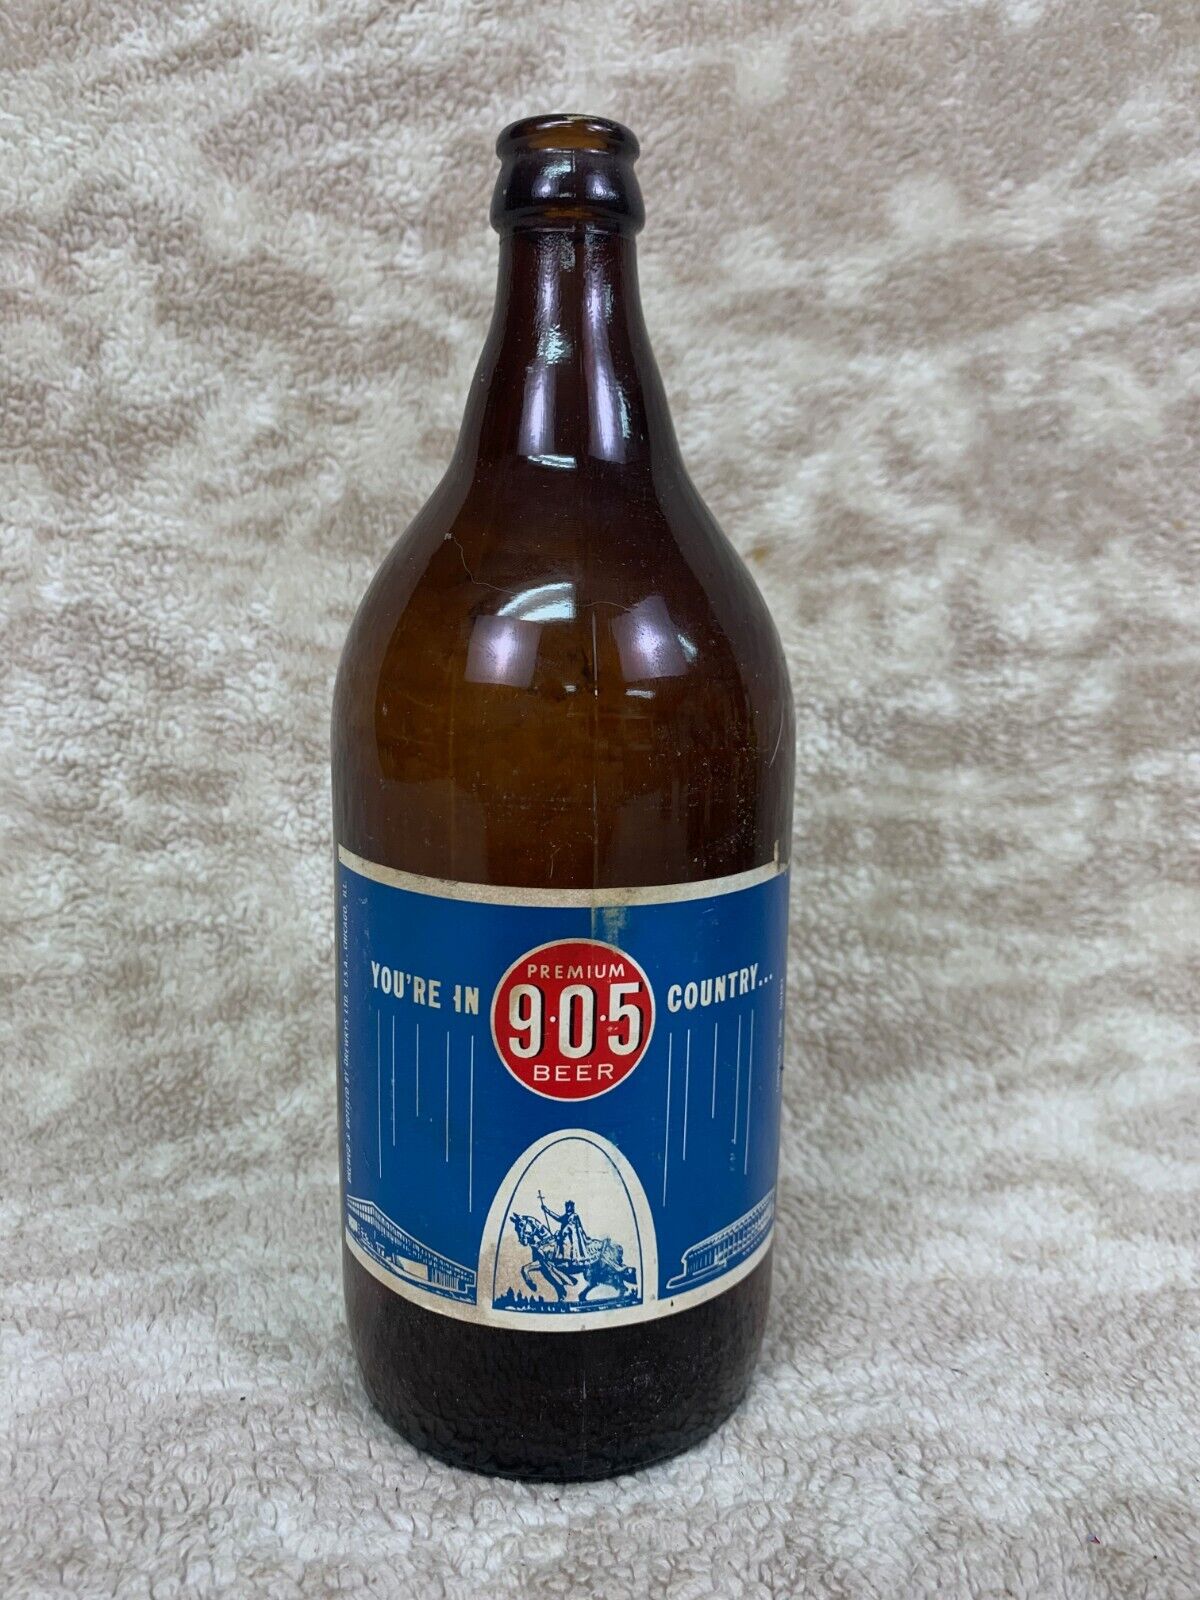 🍺🍺🍺🍺🍺🍺🍺🍺🍺Premium 905 Beer Bottle 1 Quart Empty BB3🍺🍺🍺🍺🍺🍺🍺🍺🍺